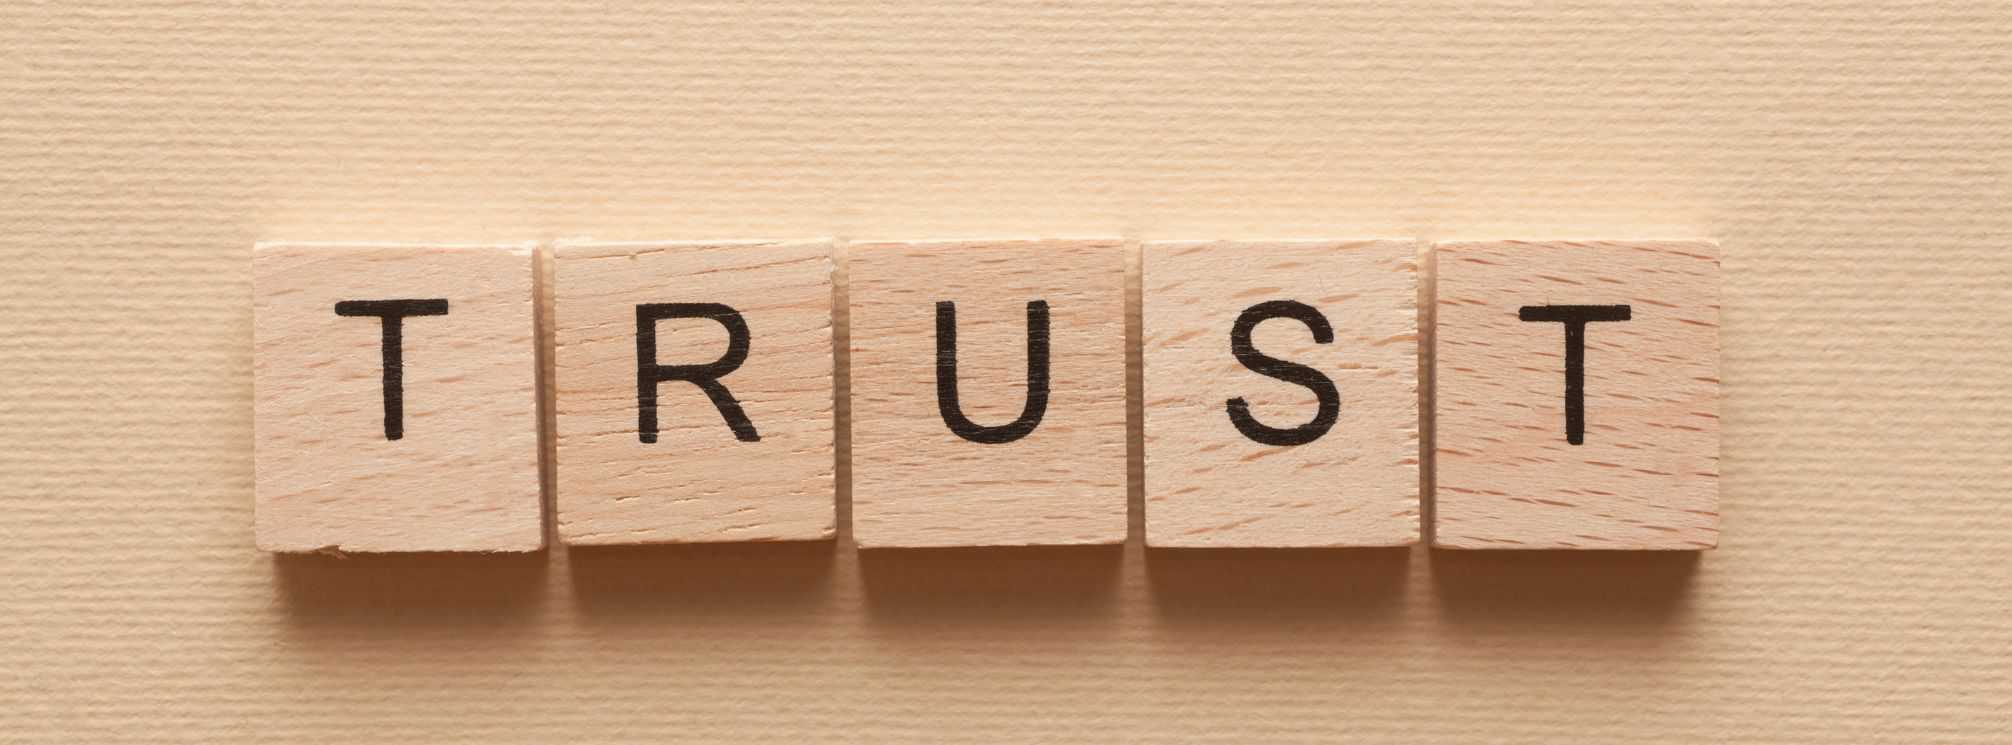 Scrabble tiles spelling the word "trust".